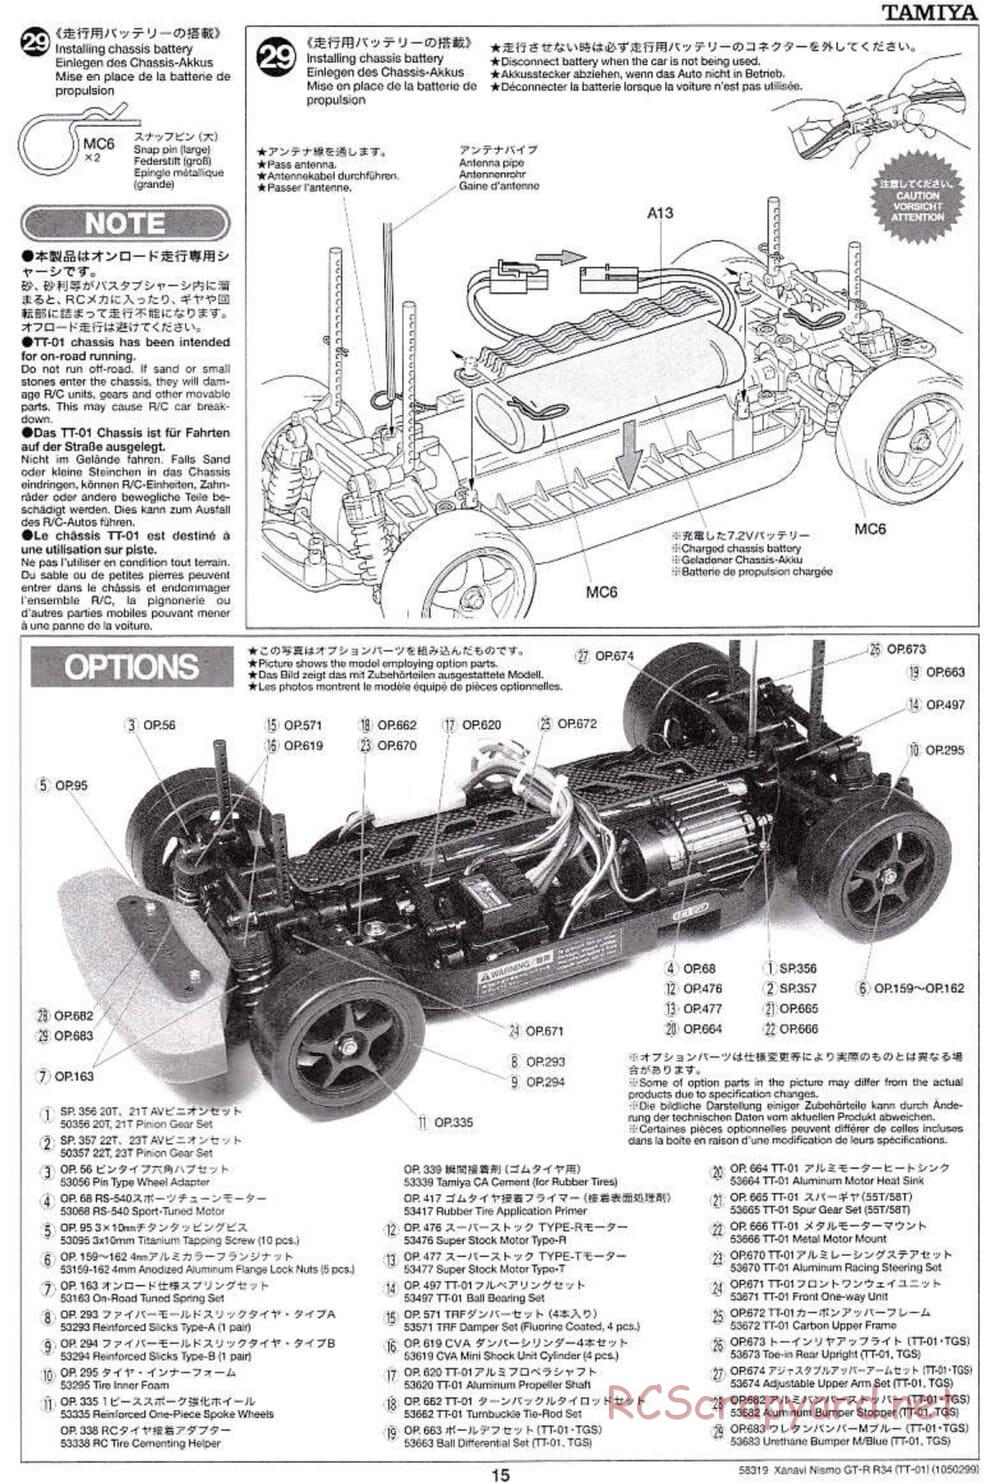 Tamiya - Xanavi Nismo GT-R R34 - TT-01 Chassis - Manual - Page 15